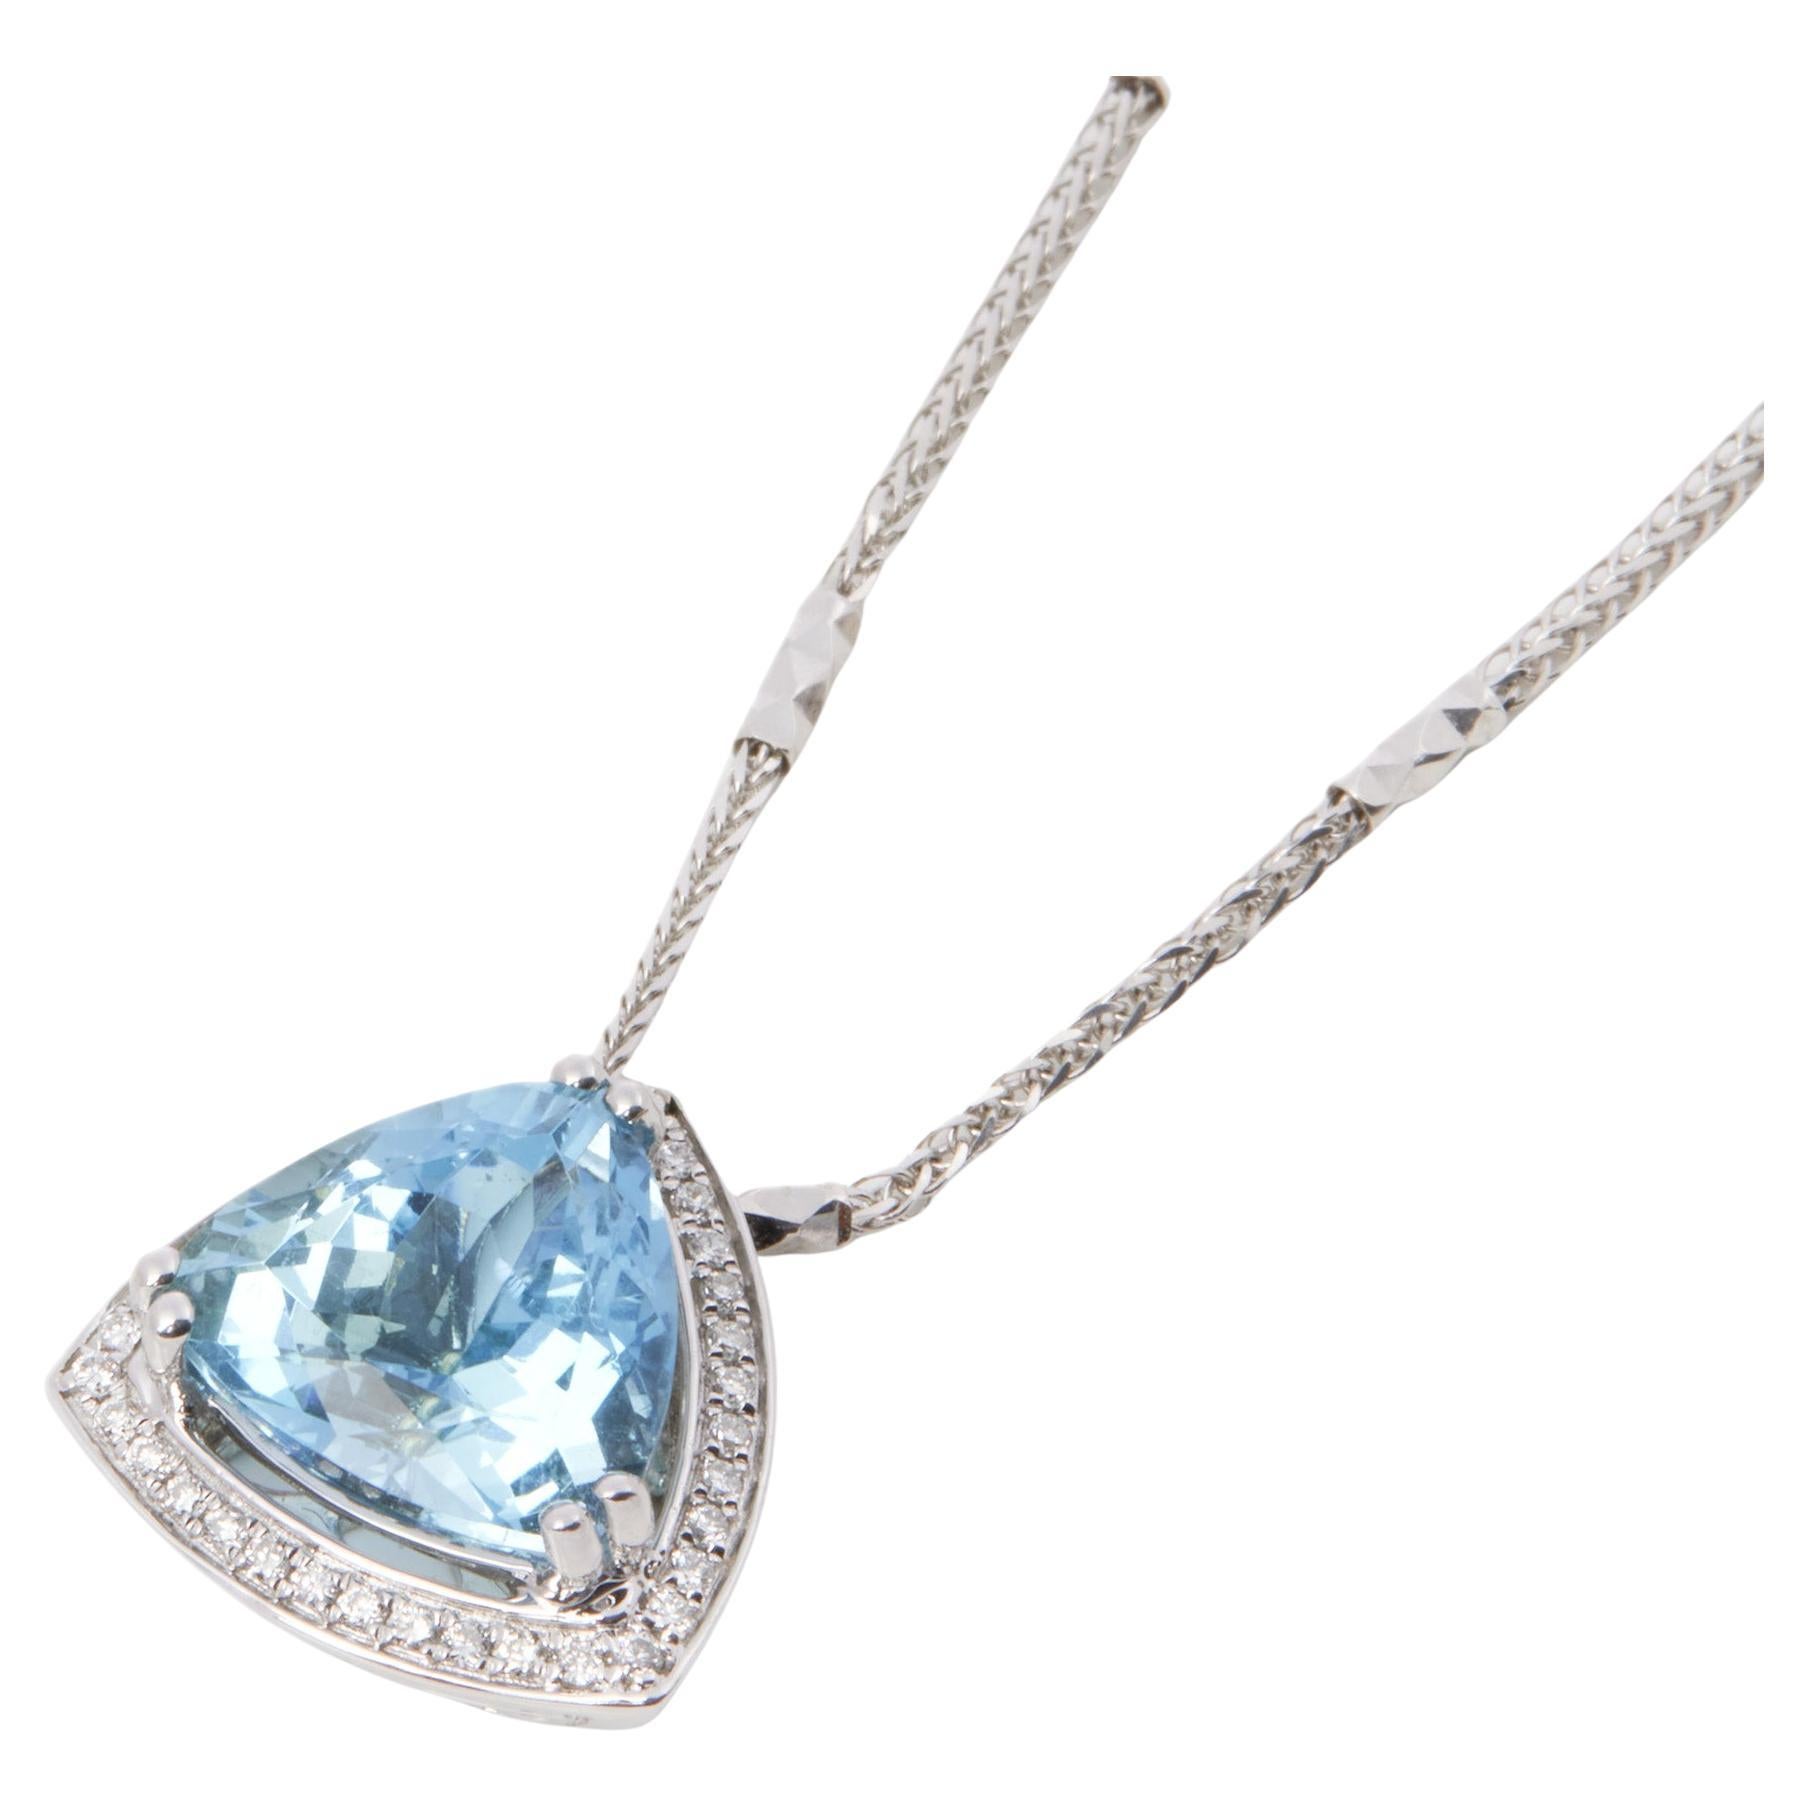 David Jerome Certified 5.76ct Trillion Cut Aquamarine and Diamond Pendant For Sale